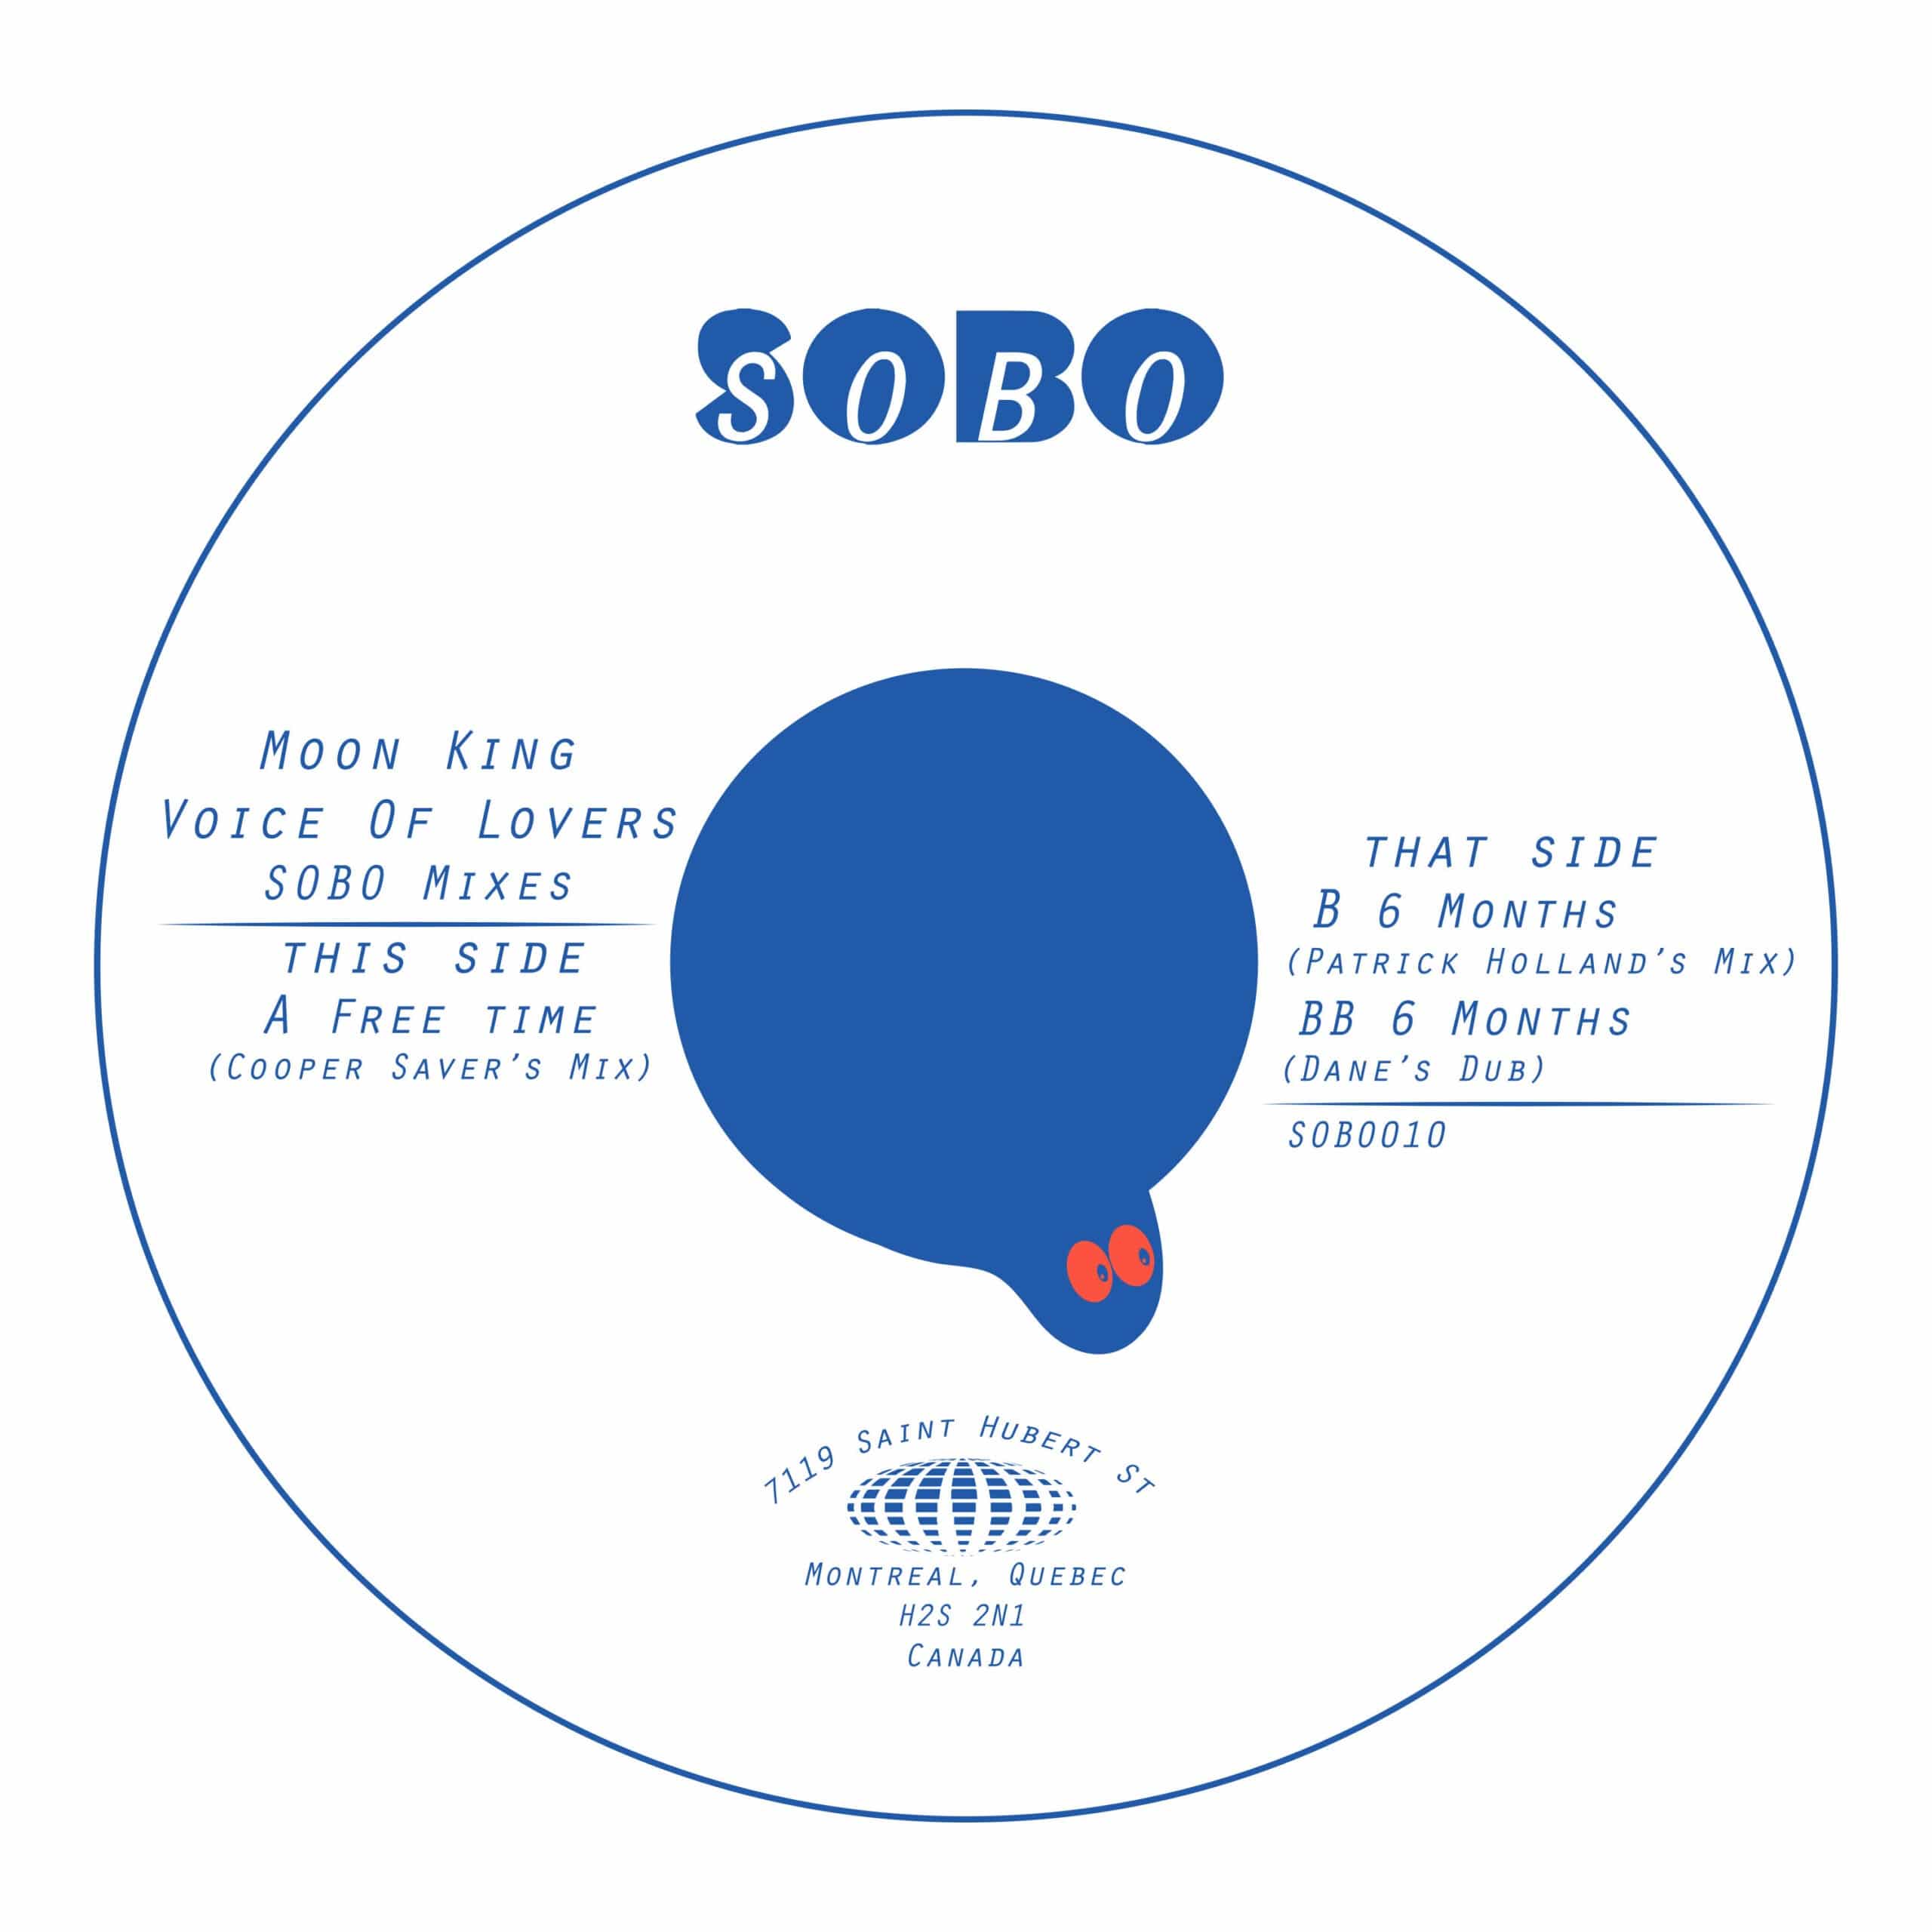 Moon King - Voice of Lovers SOBO Mixes - SOBO-010 - Sobo